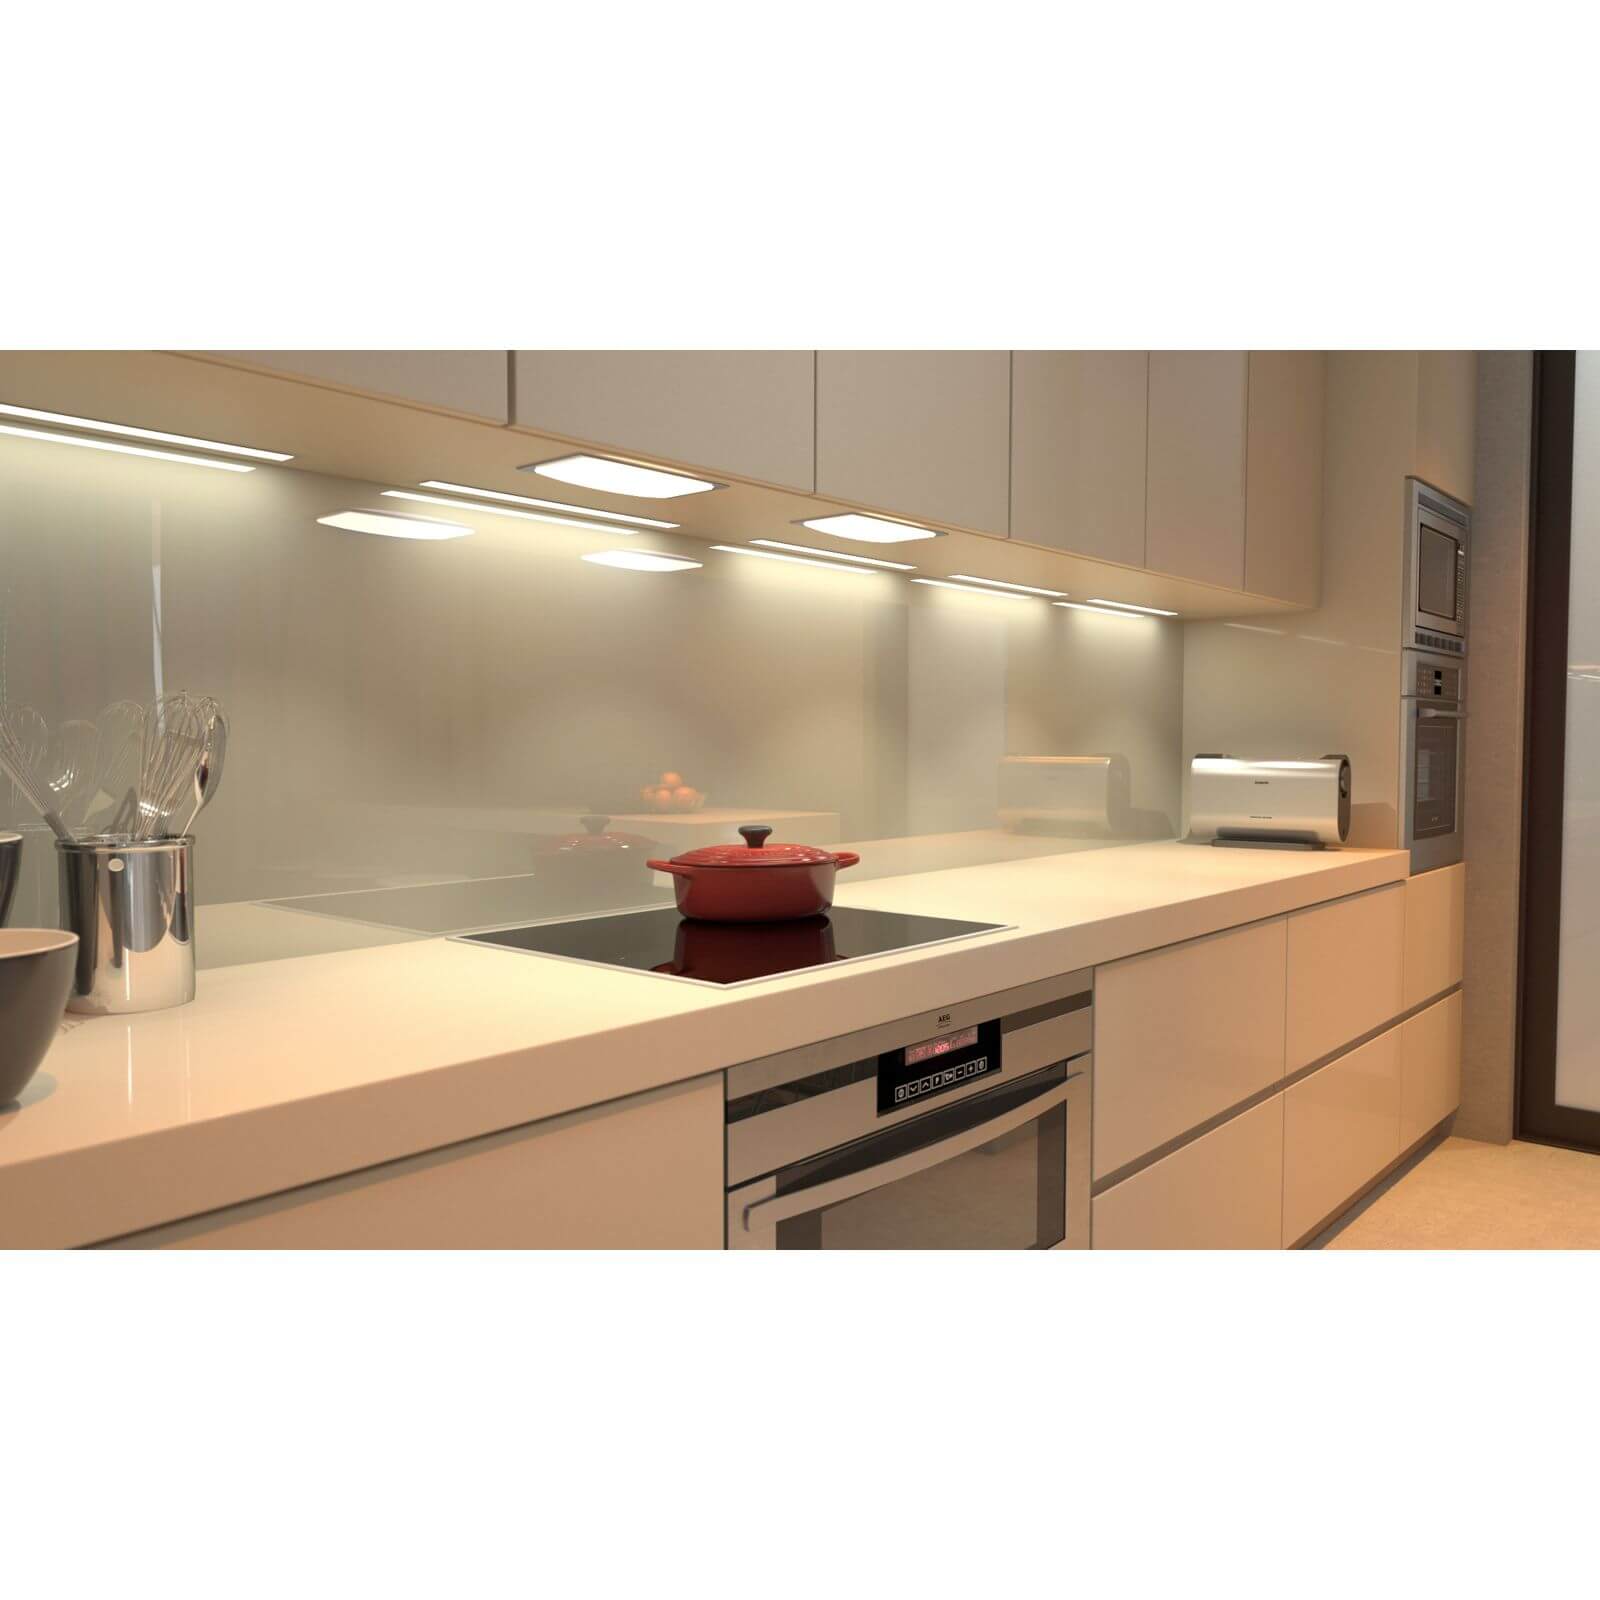 Zenolite Acrylic Kitchen Splashback Panel - 2440 x 605 x 4mm - Safari